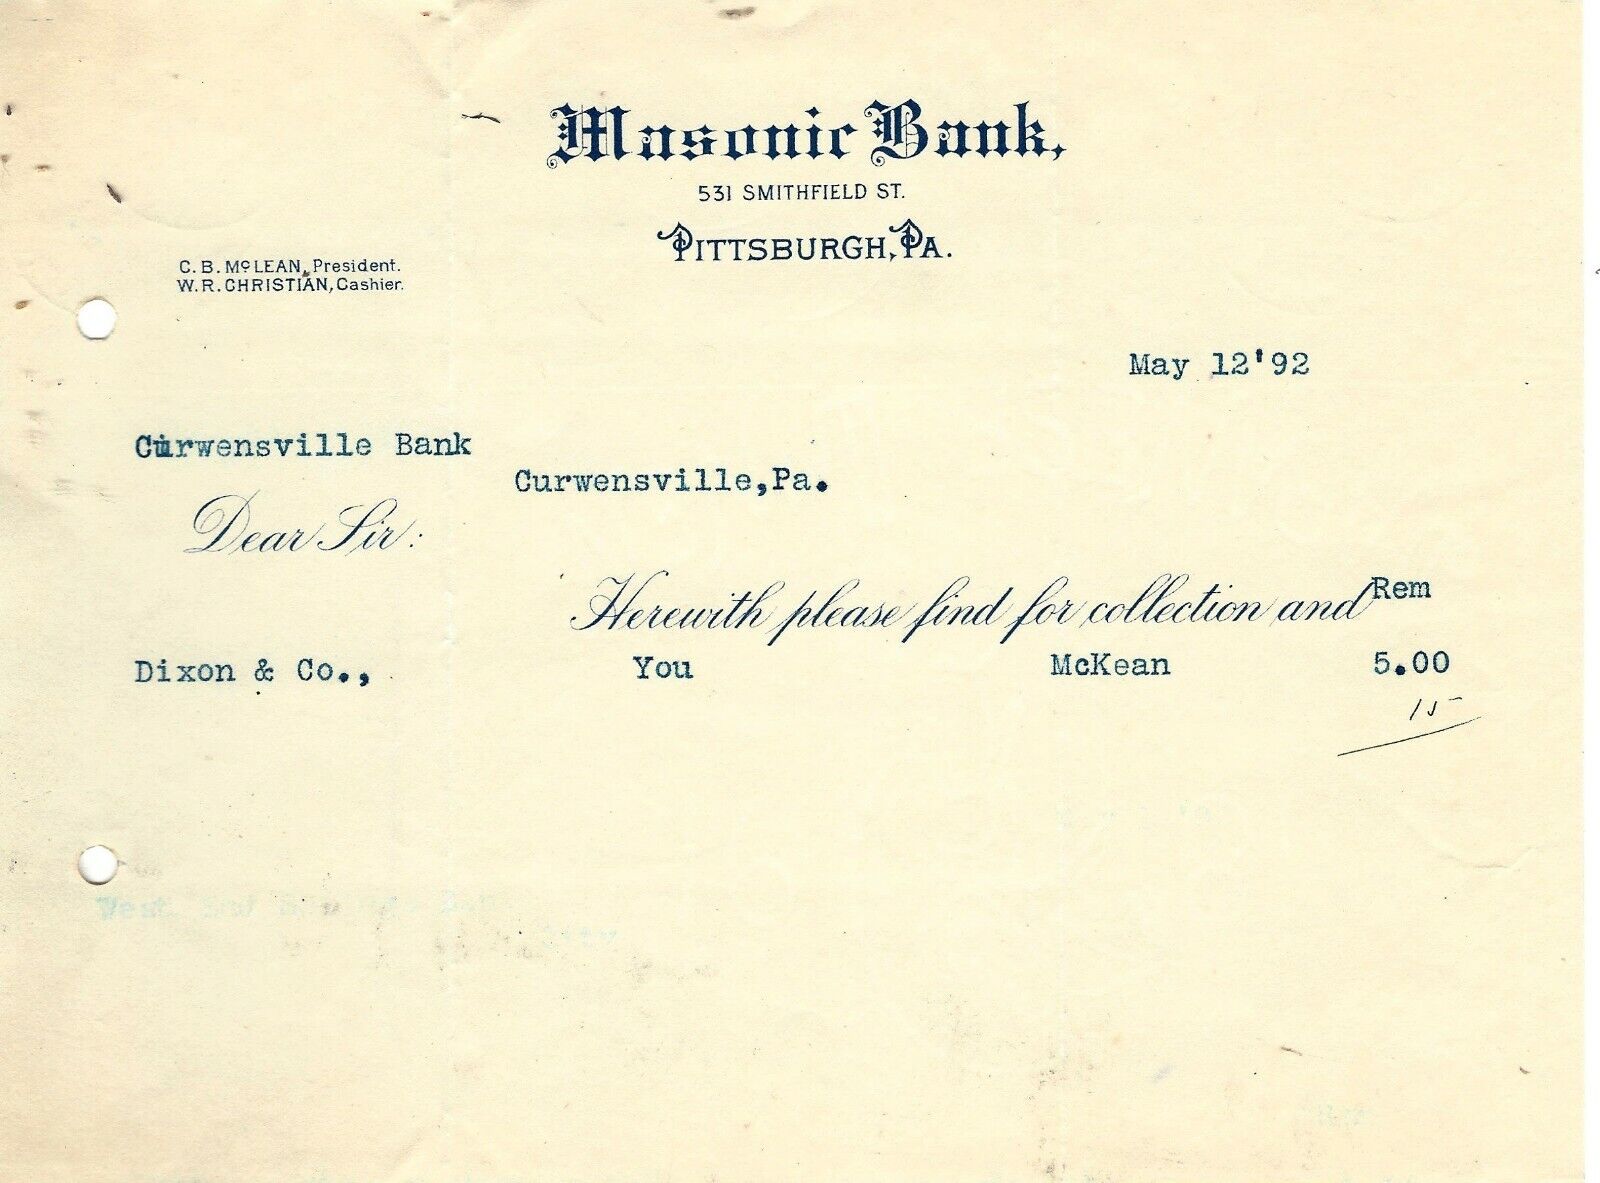 1891, Masonic Bank, Pittsburgh, Pennsylvania Deposit Slip, 531 Smithfield Street